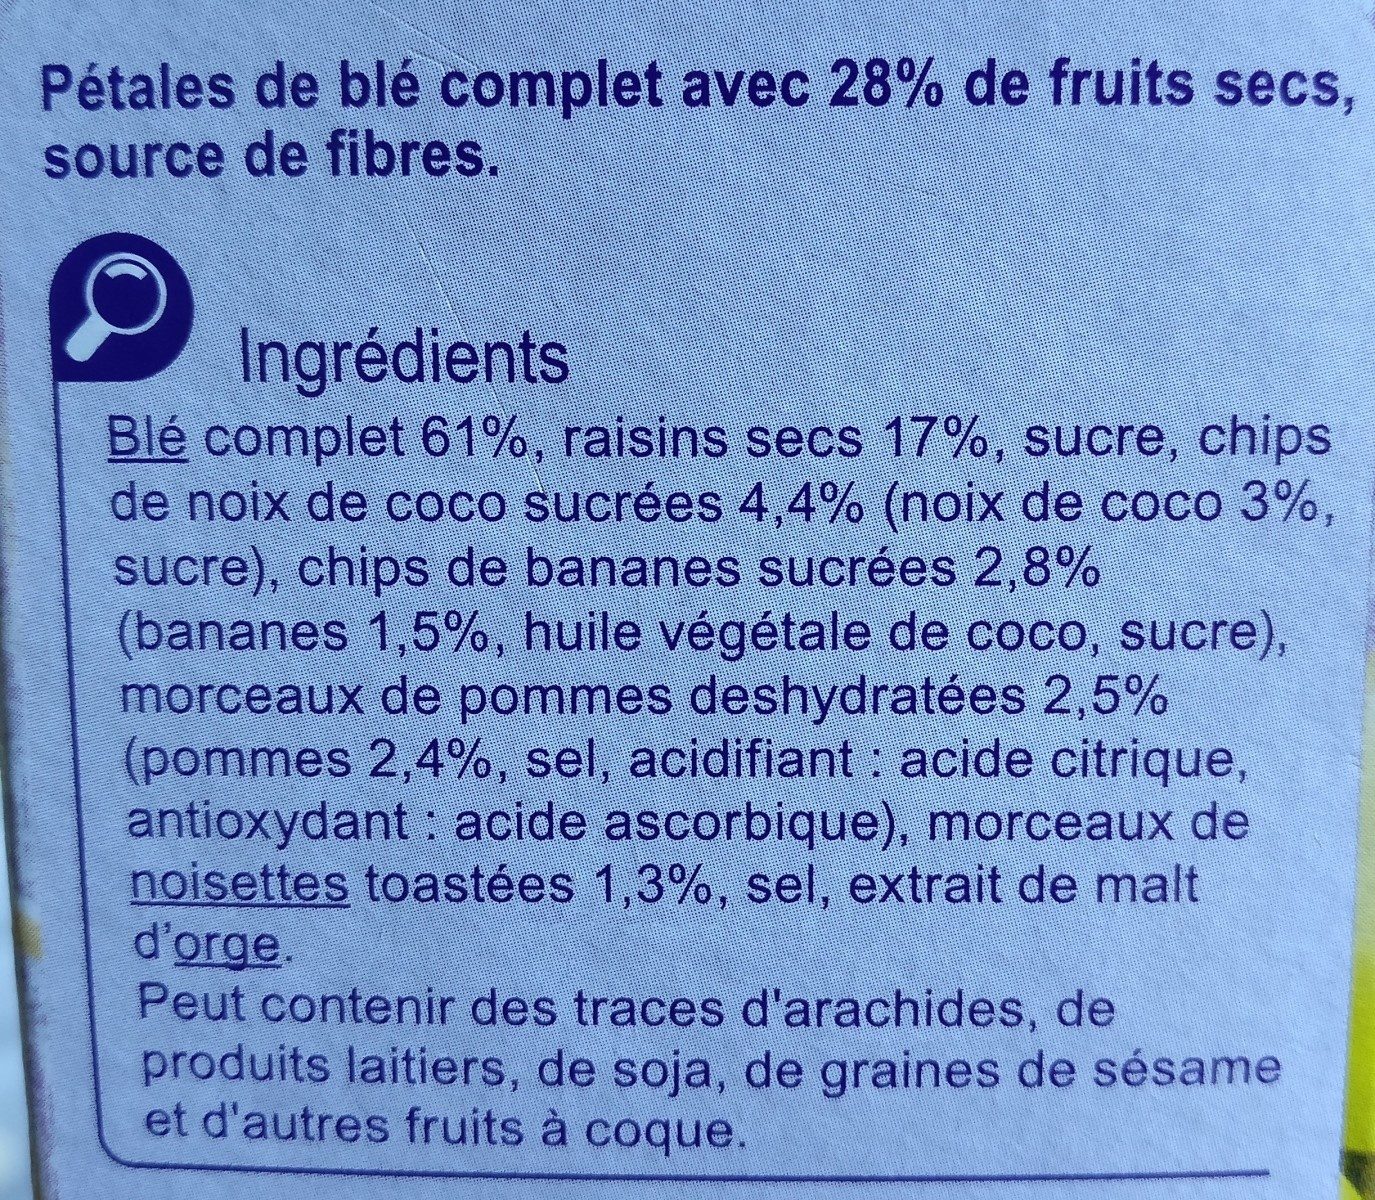 Fibra 5 fruits secs - Ingredienti - fr